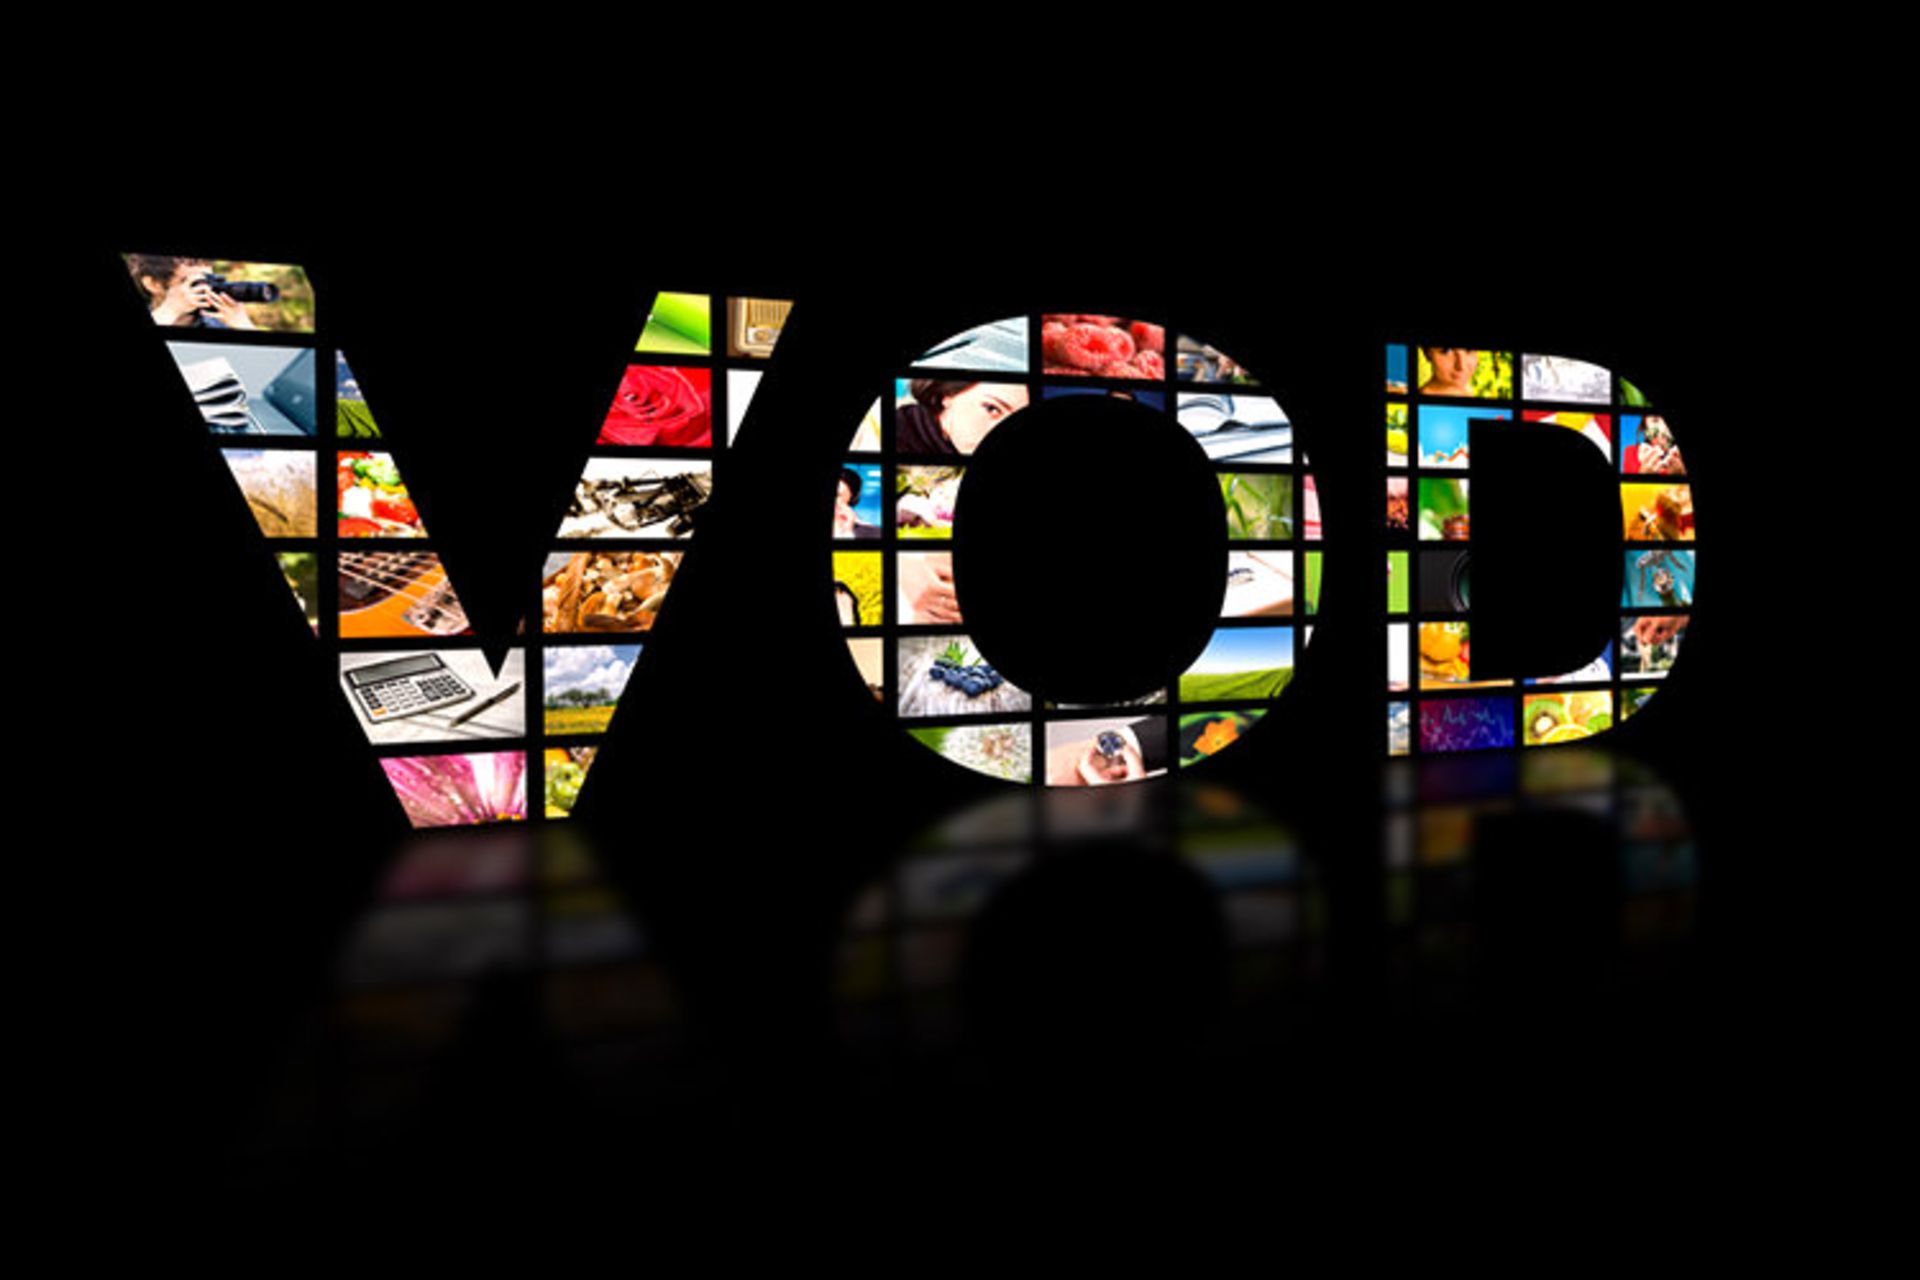 VOD video-on-demand